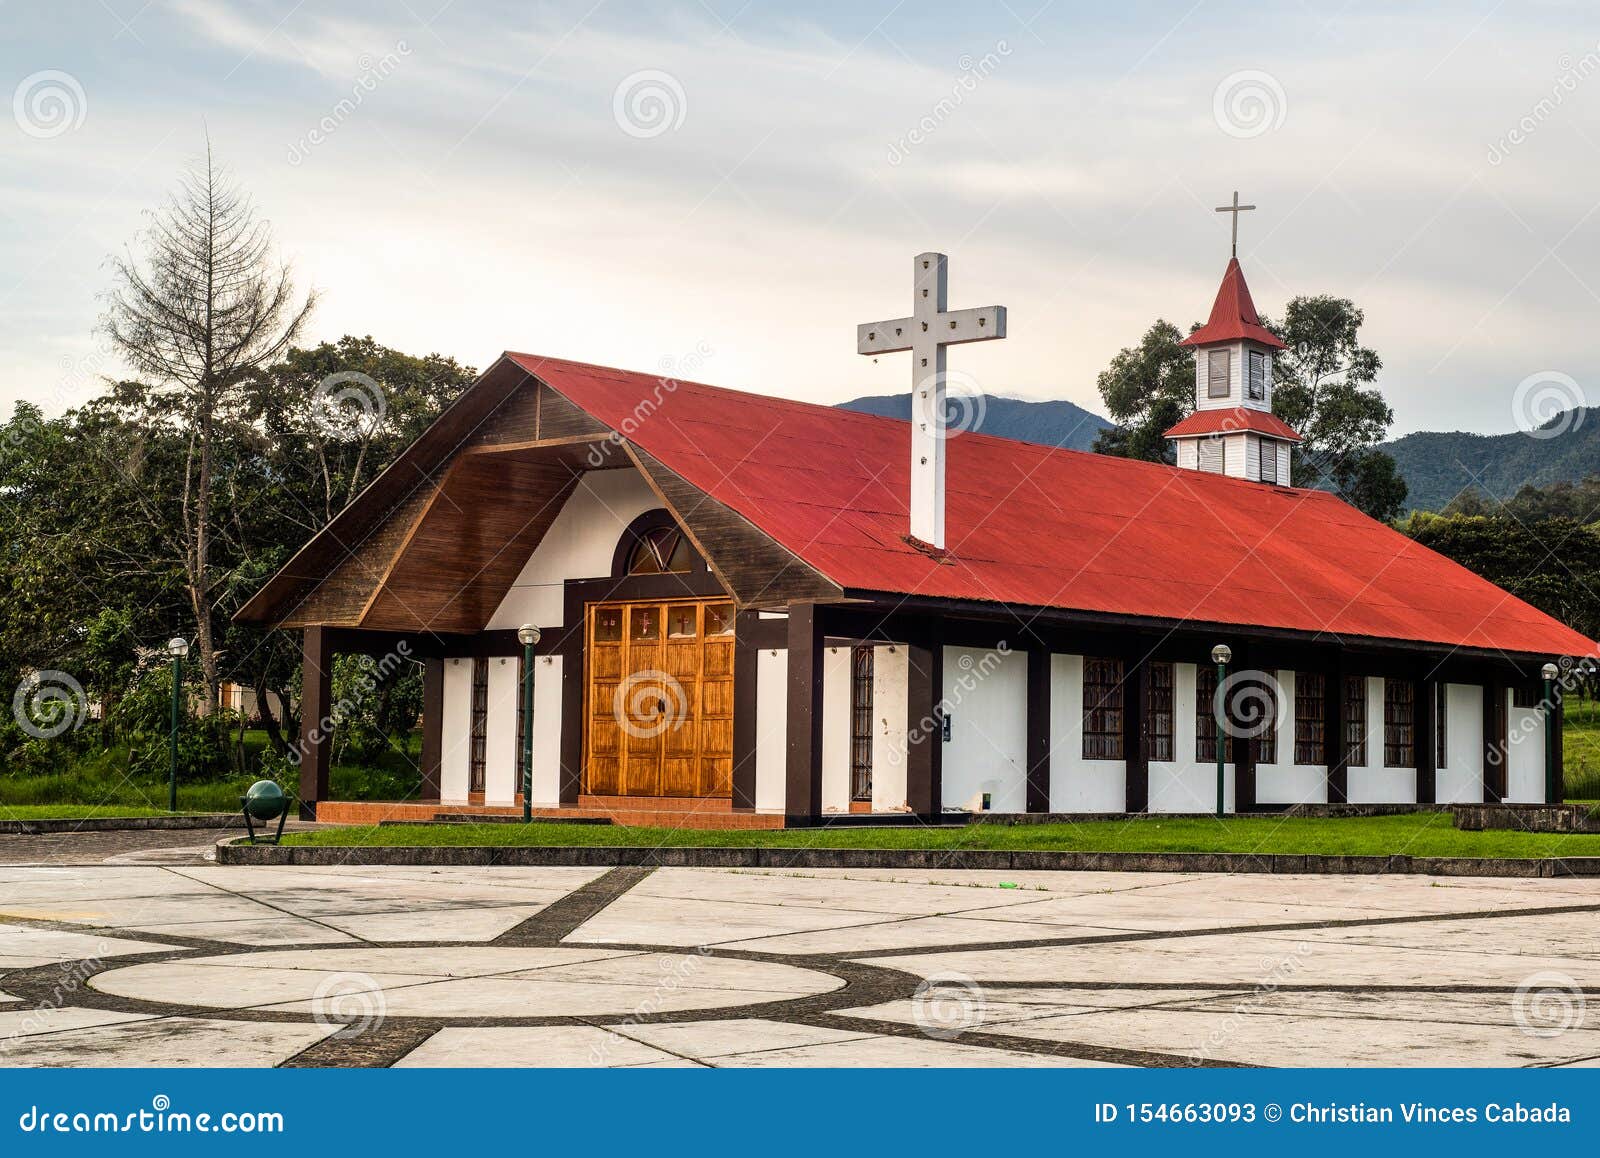 wooden church at oxapampa city in peru